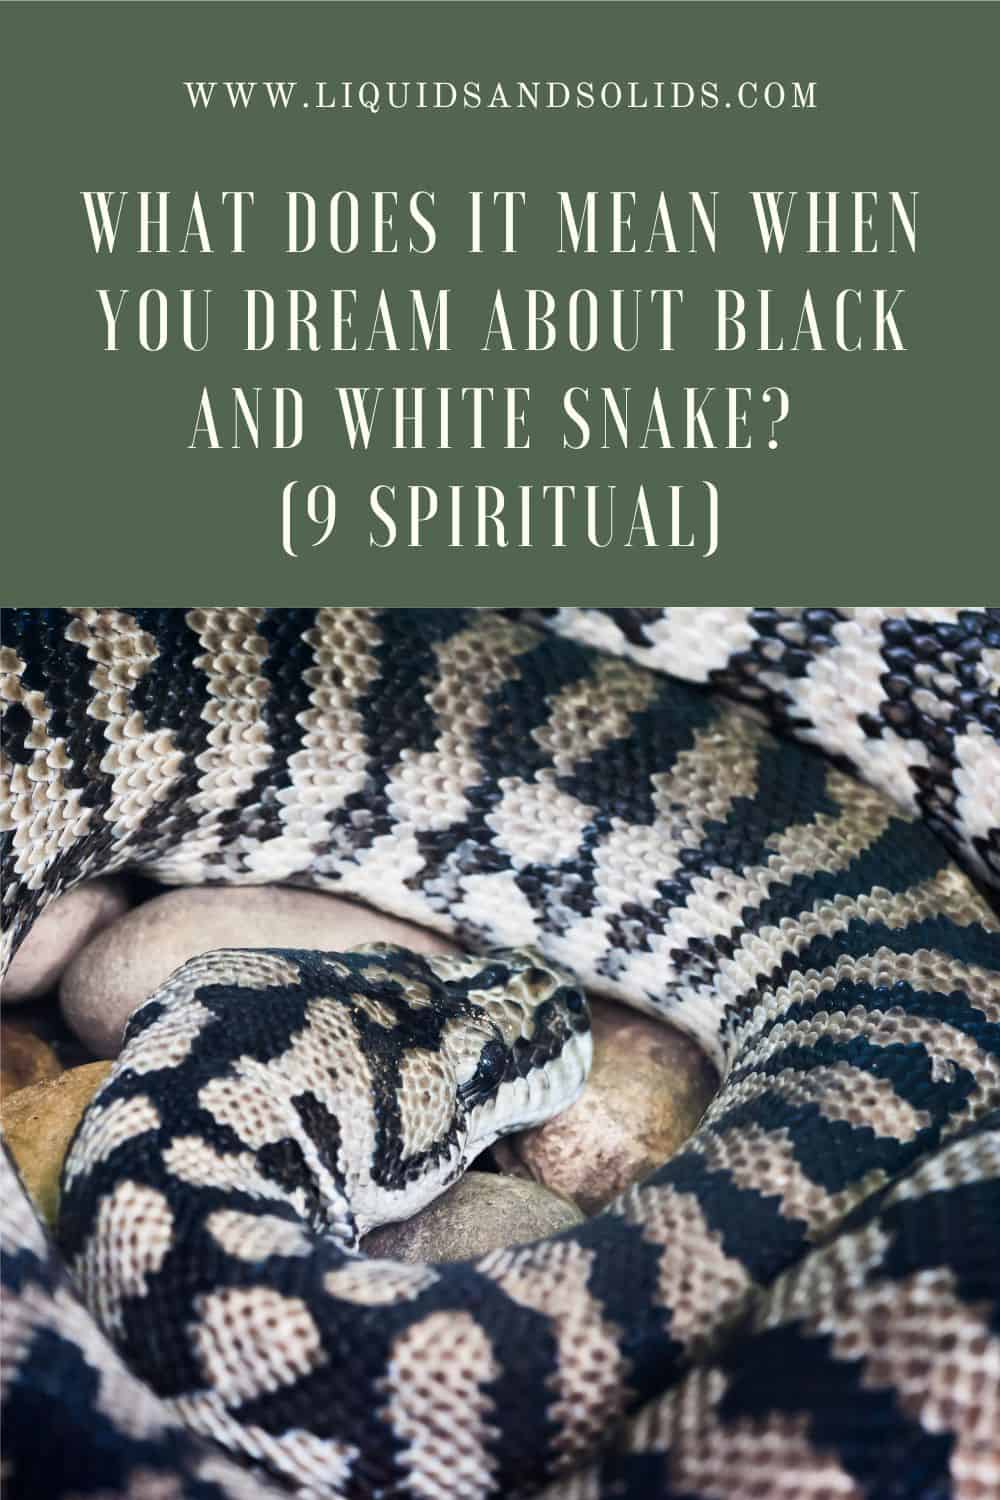  Dream About Black and White Snake? (9 vaimset tähendust)